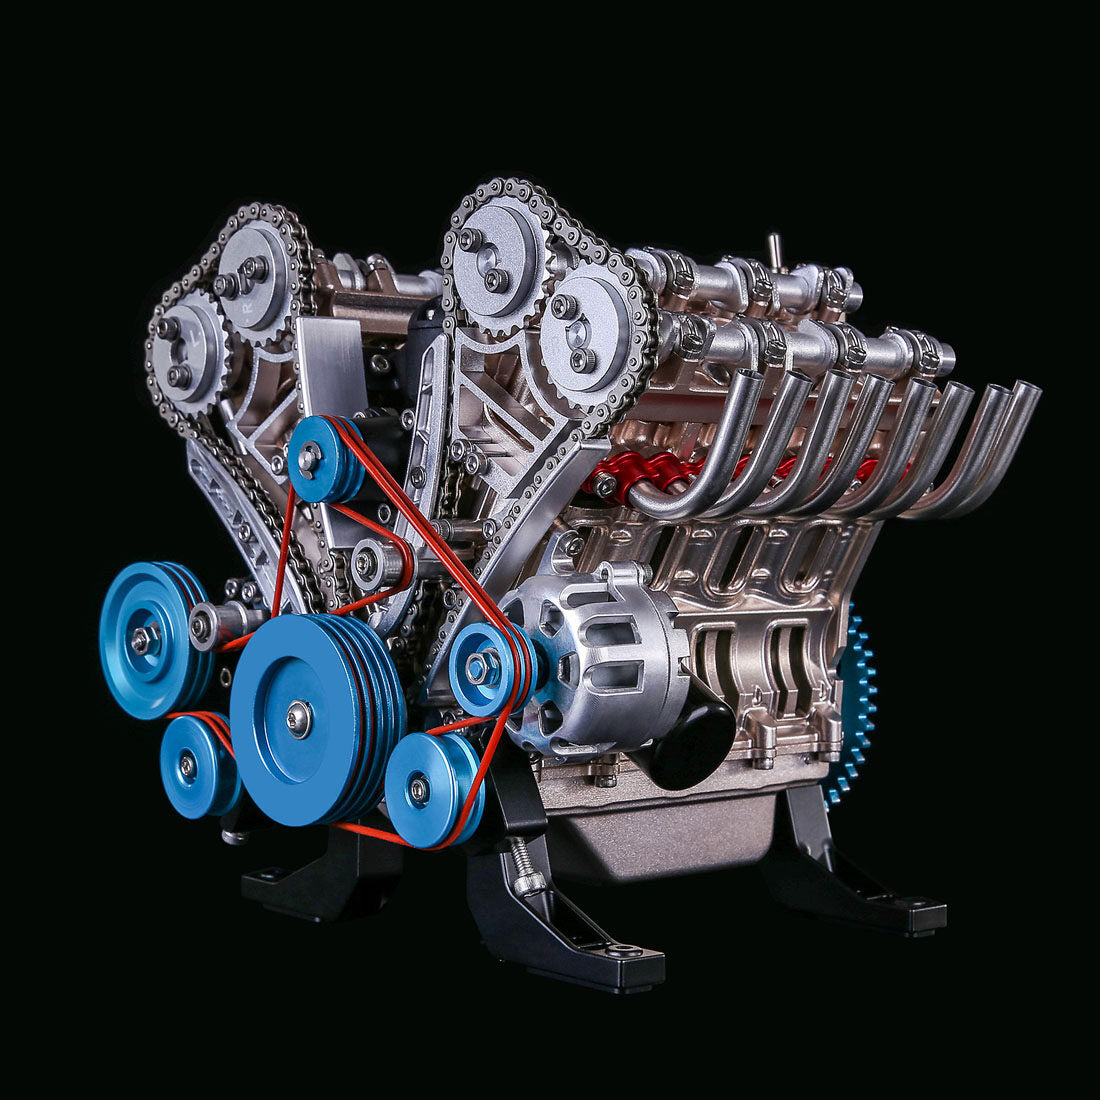 TECHING 500+ Teile 1:3 V8 Motor Modell Bausatz, Metall-Mechanik Motor Experiment Physik Spielzeug 4